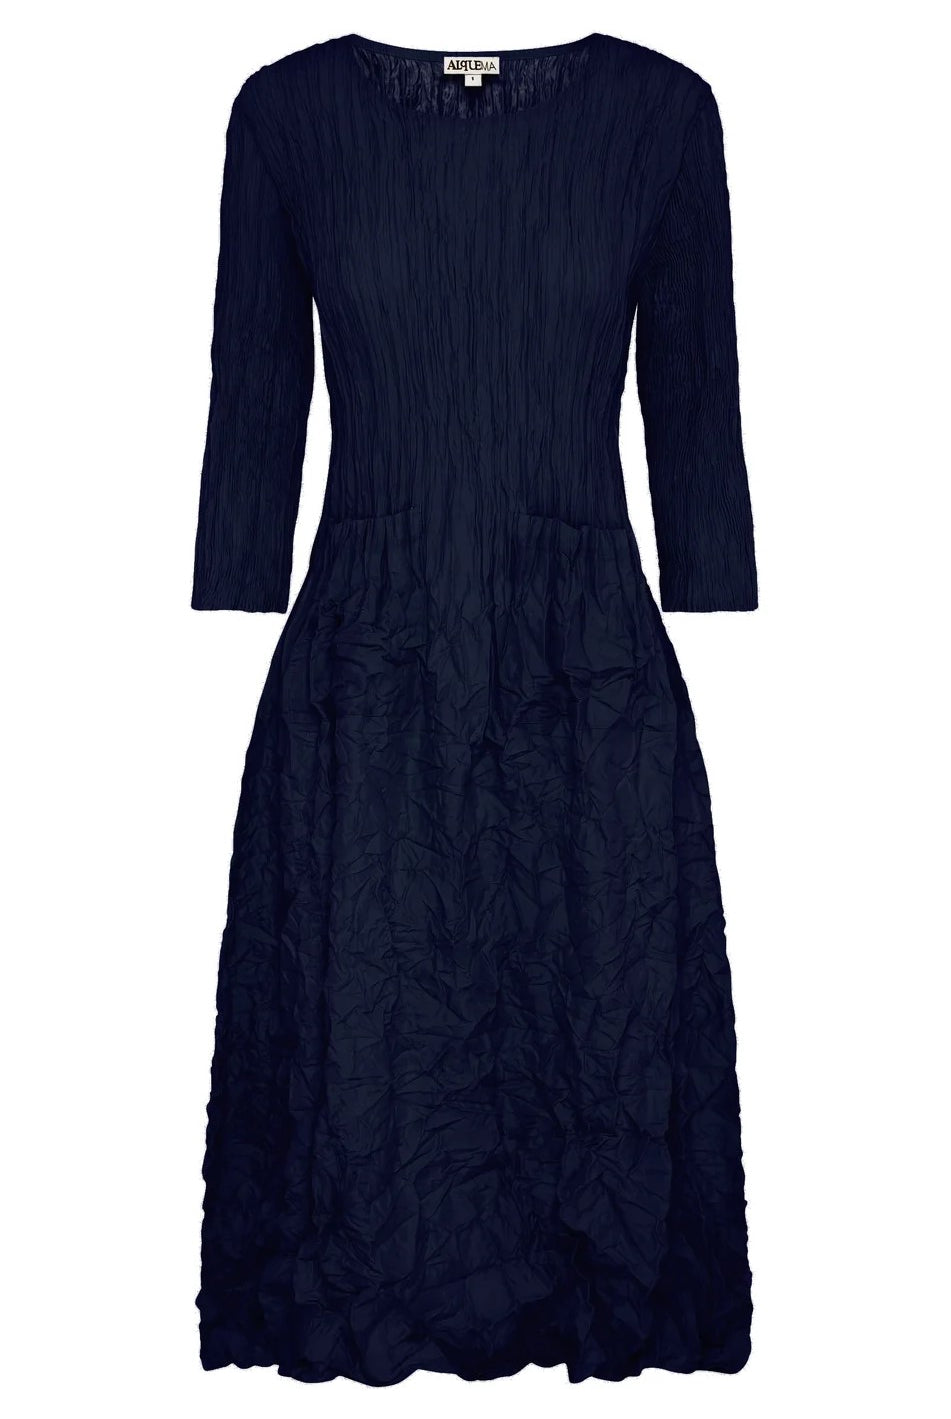 ALQUEMA - 3/4 Sleeve Smash Pocket Dress Navy - Magpie Style